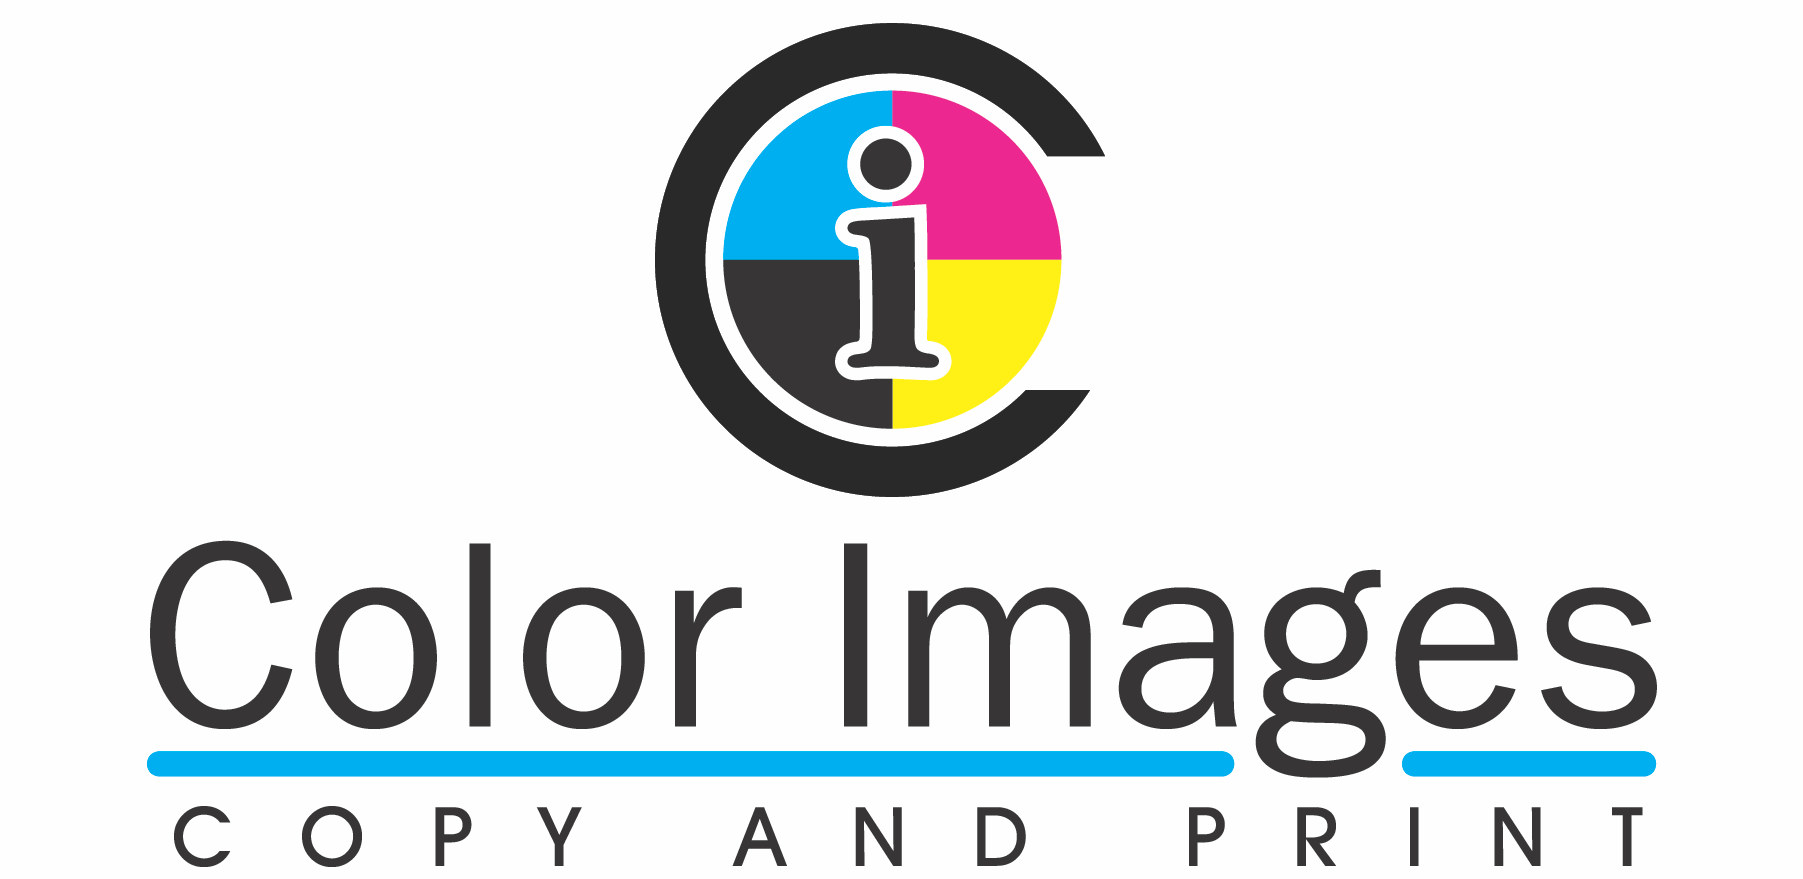 ColorImages_Logo_Outline.png